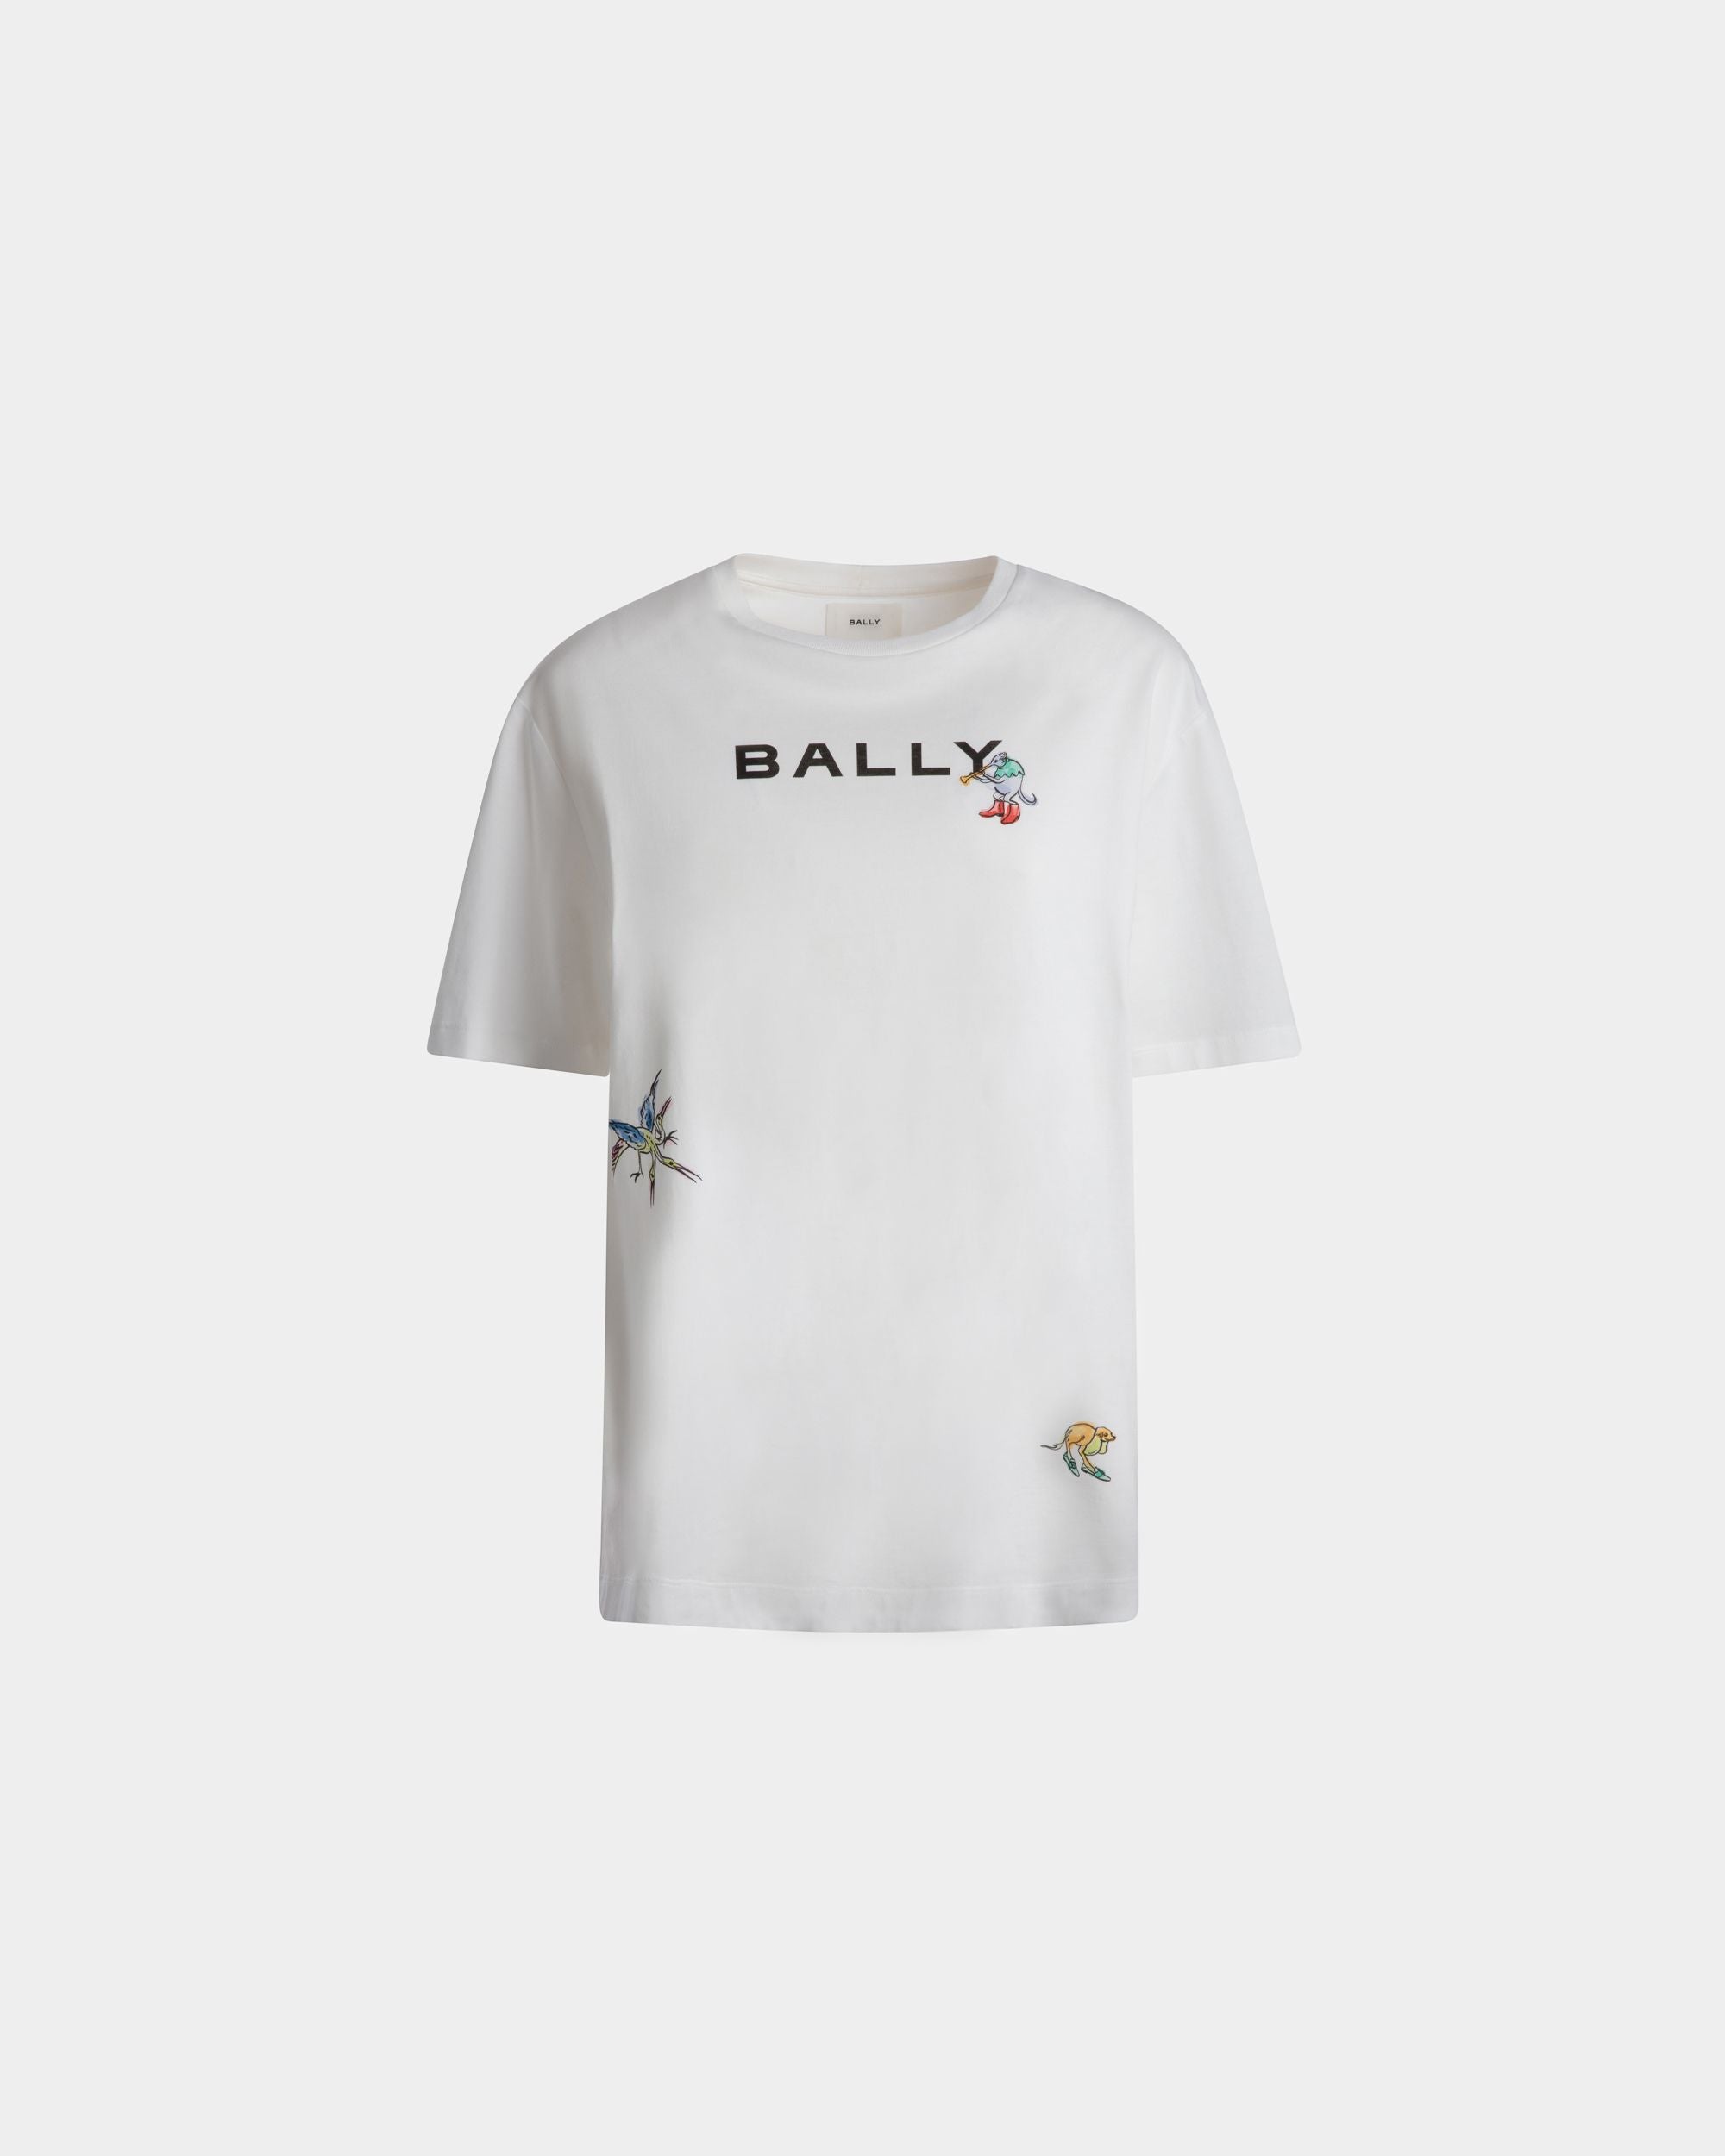 Women's T-Shirt in White Cotton | Bally | Still Life Front